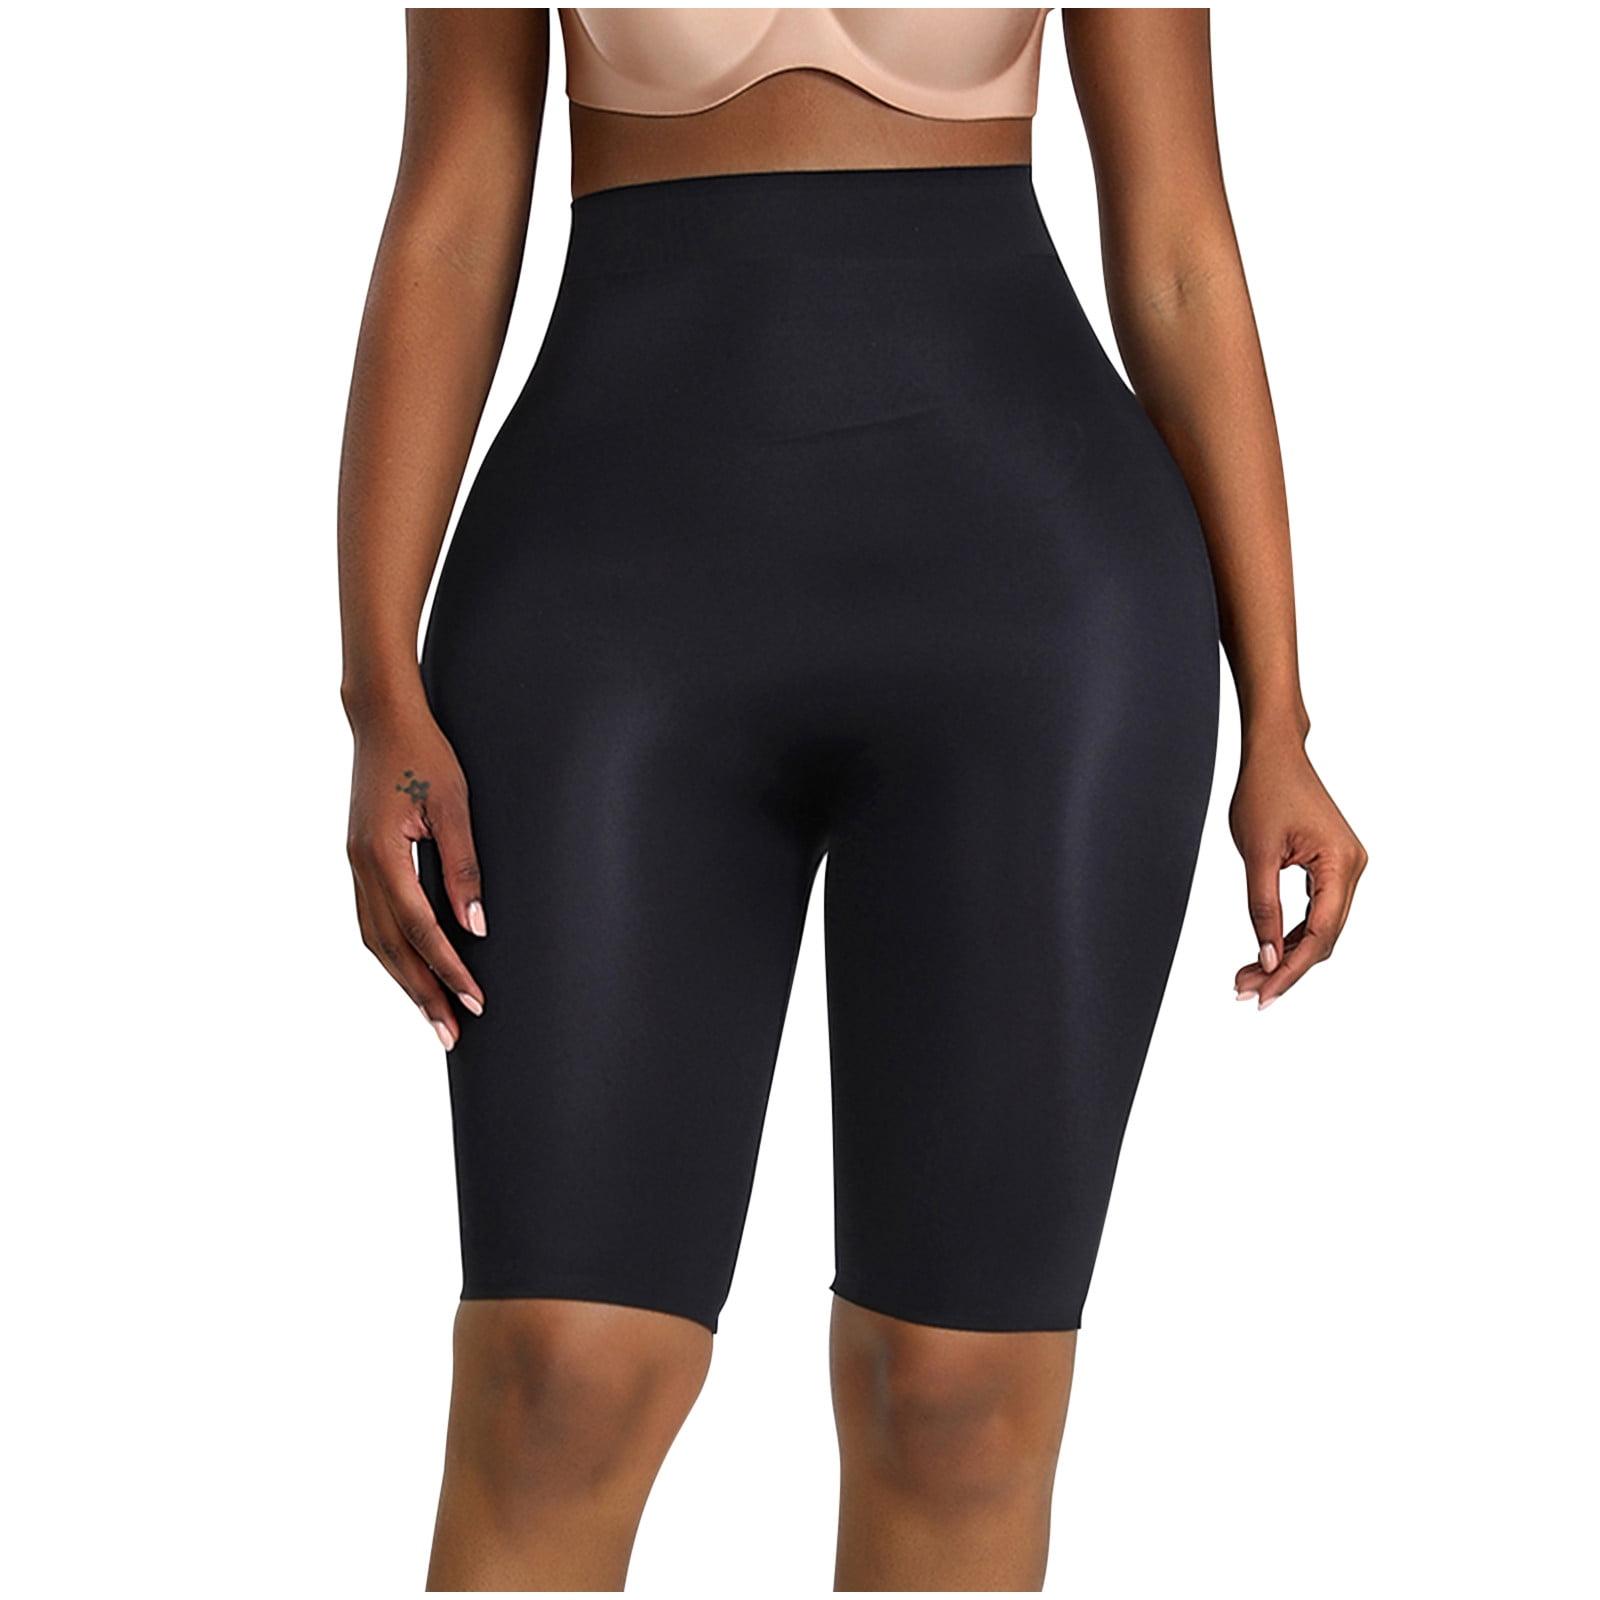 Odeerbi Shapewear for Women 2024 Tummy Control Bodysuit Seamless